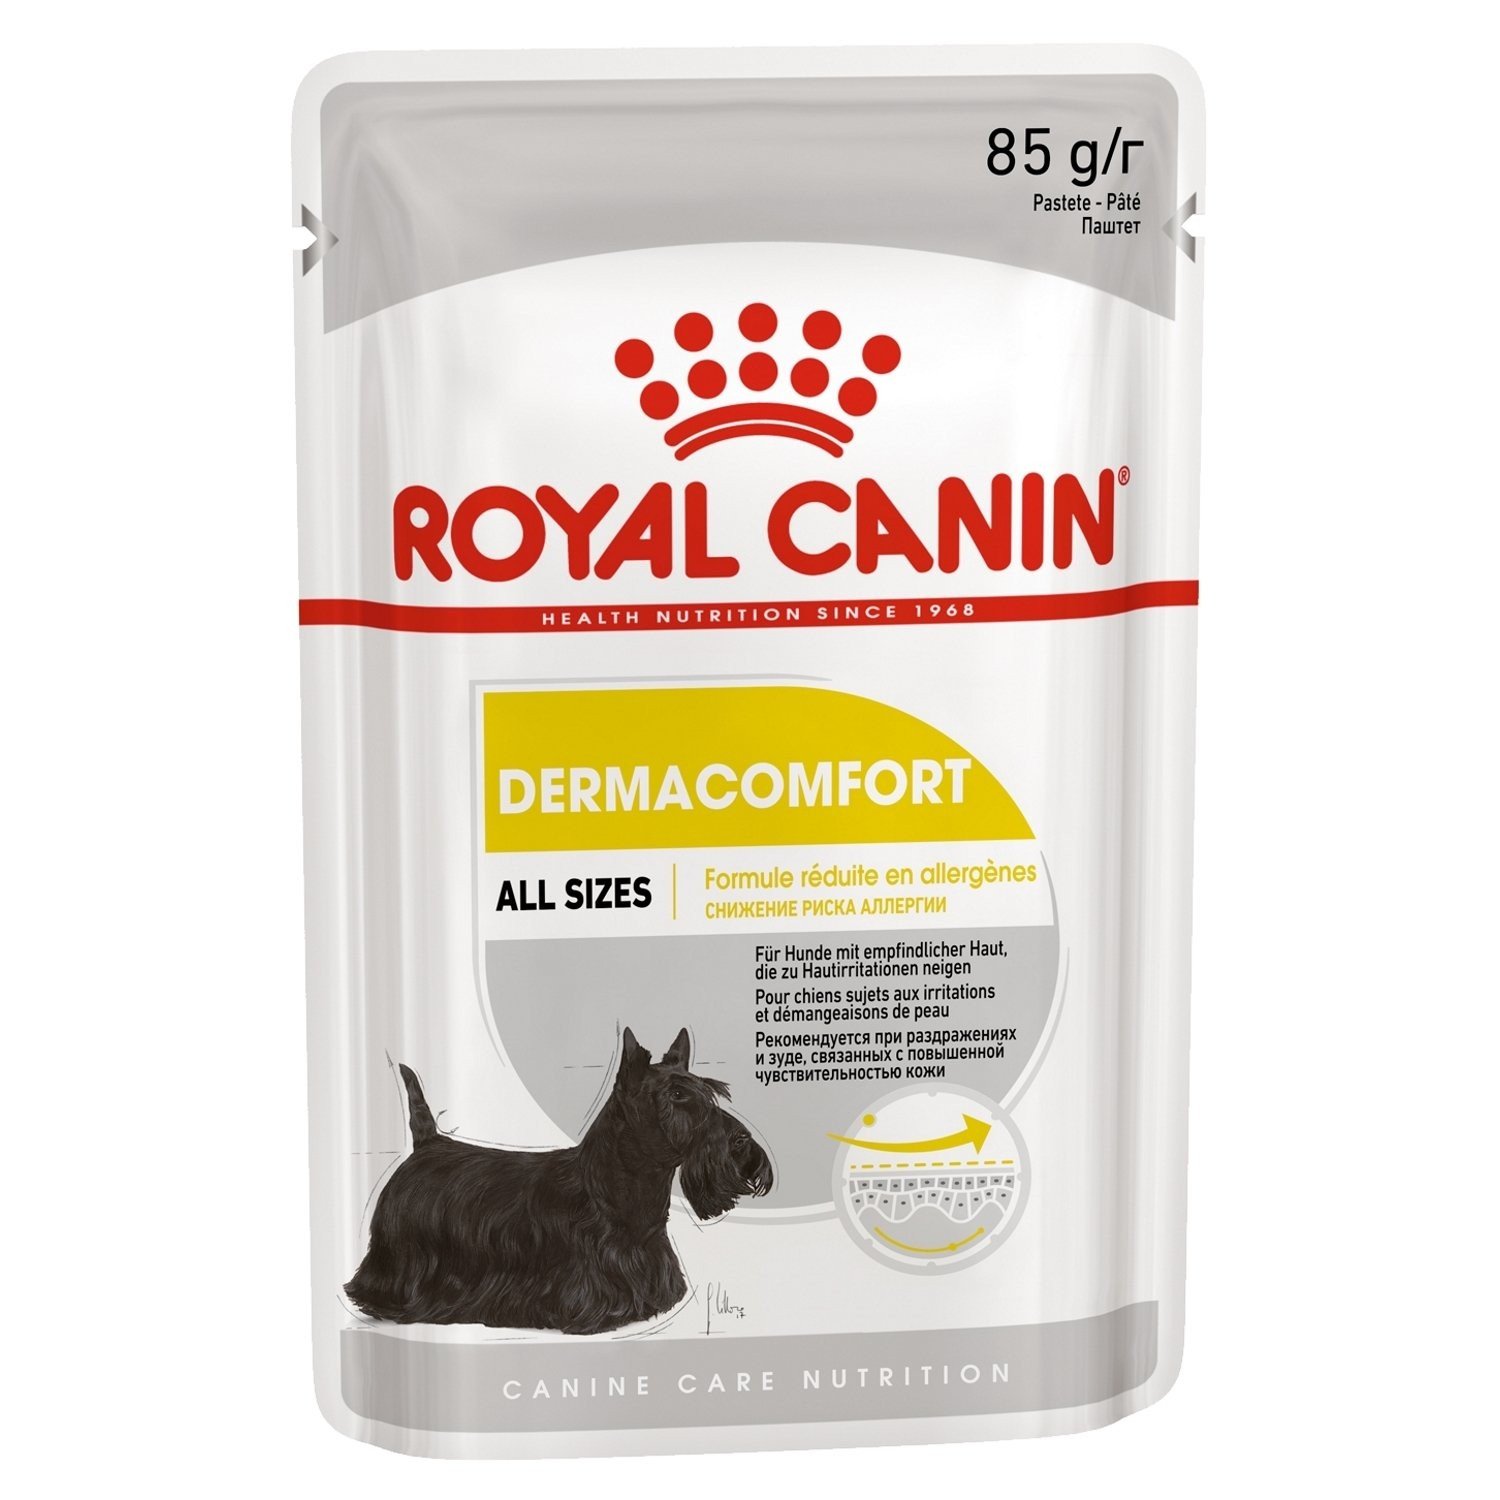 Royal Canin Dermacomfort Sacchetto conmousse fresca per cani sensibili